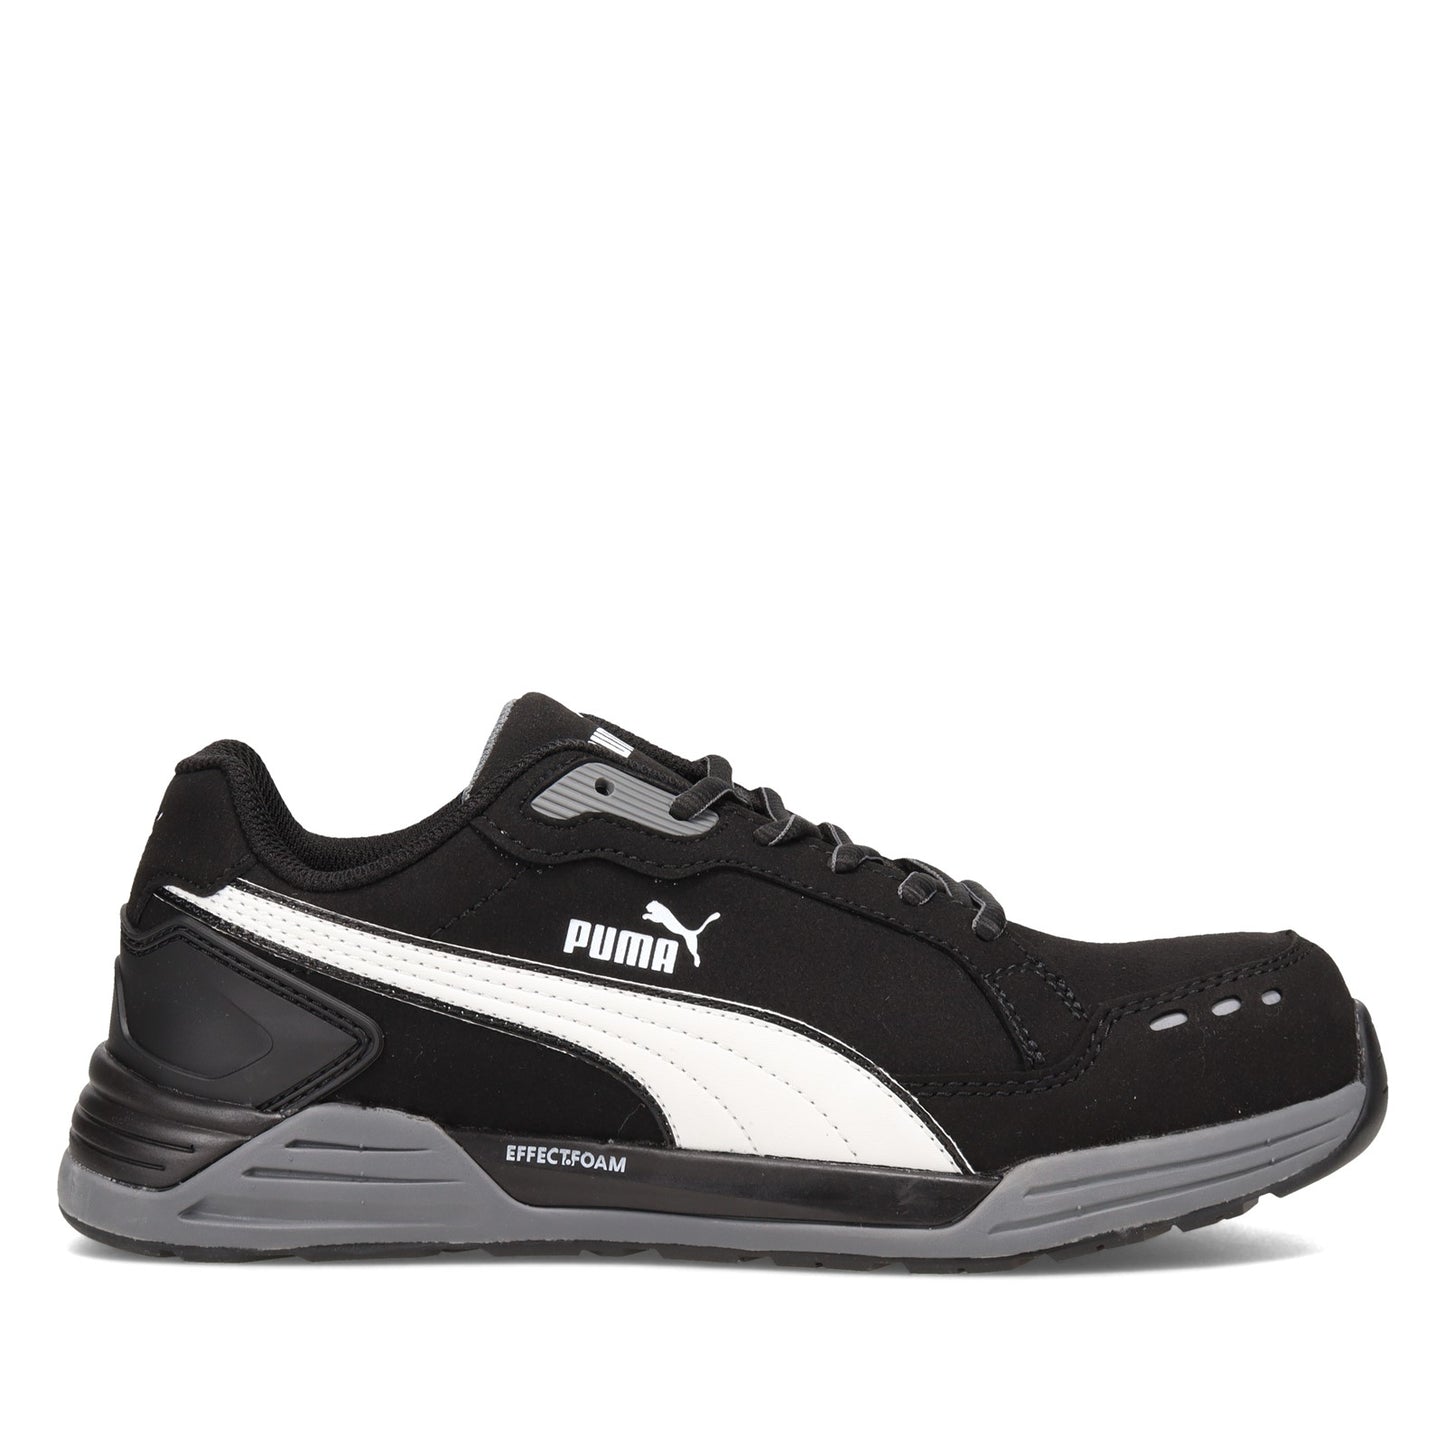 Peltz Shoes  Men's Puma Safety Airtwist CT Work Shoe BLACK 644655